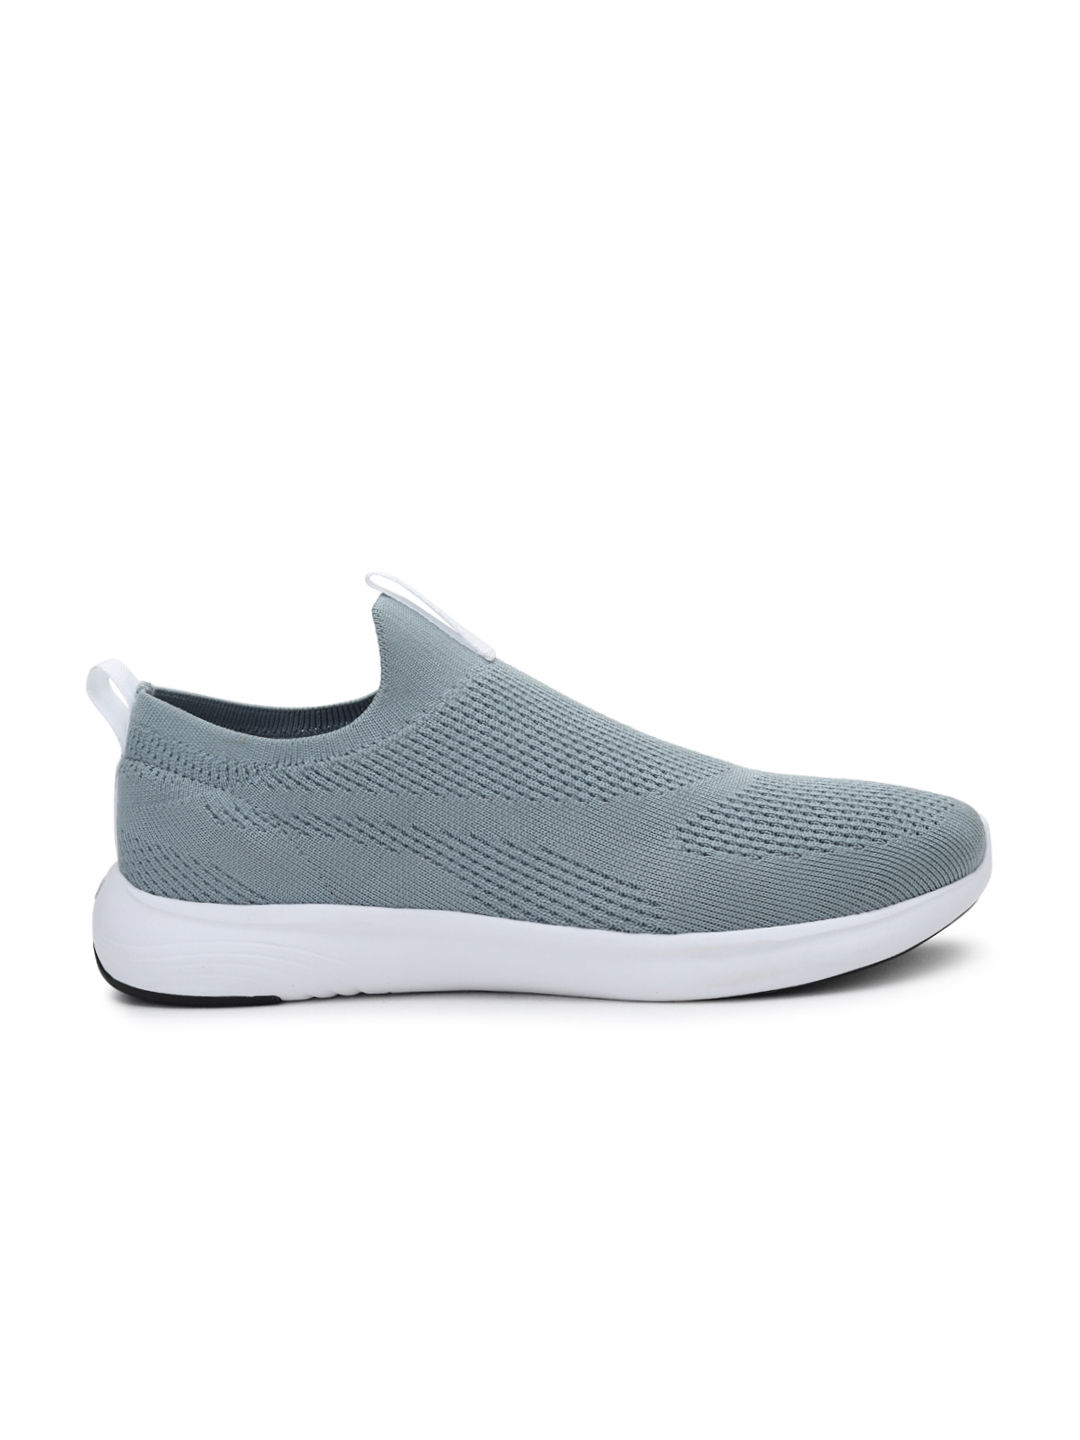 Puma Softride Clean V2 Mens Gray Walking shoes: Buy Puma Softride Clean ...